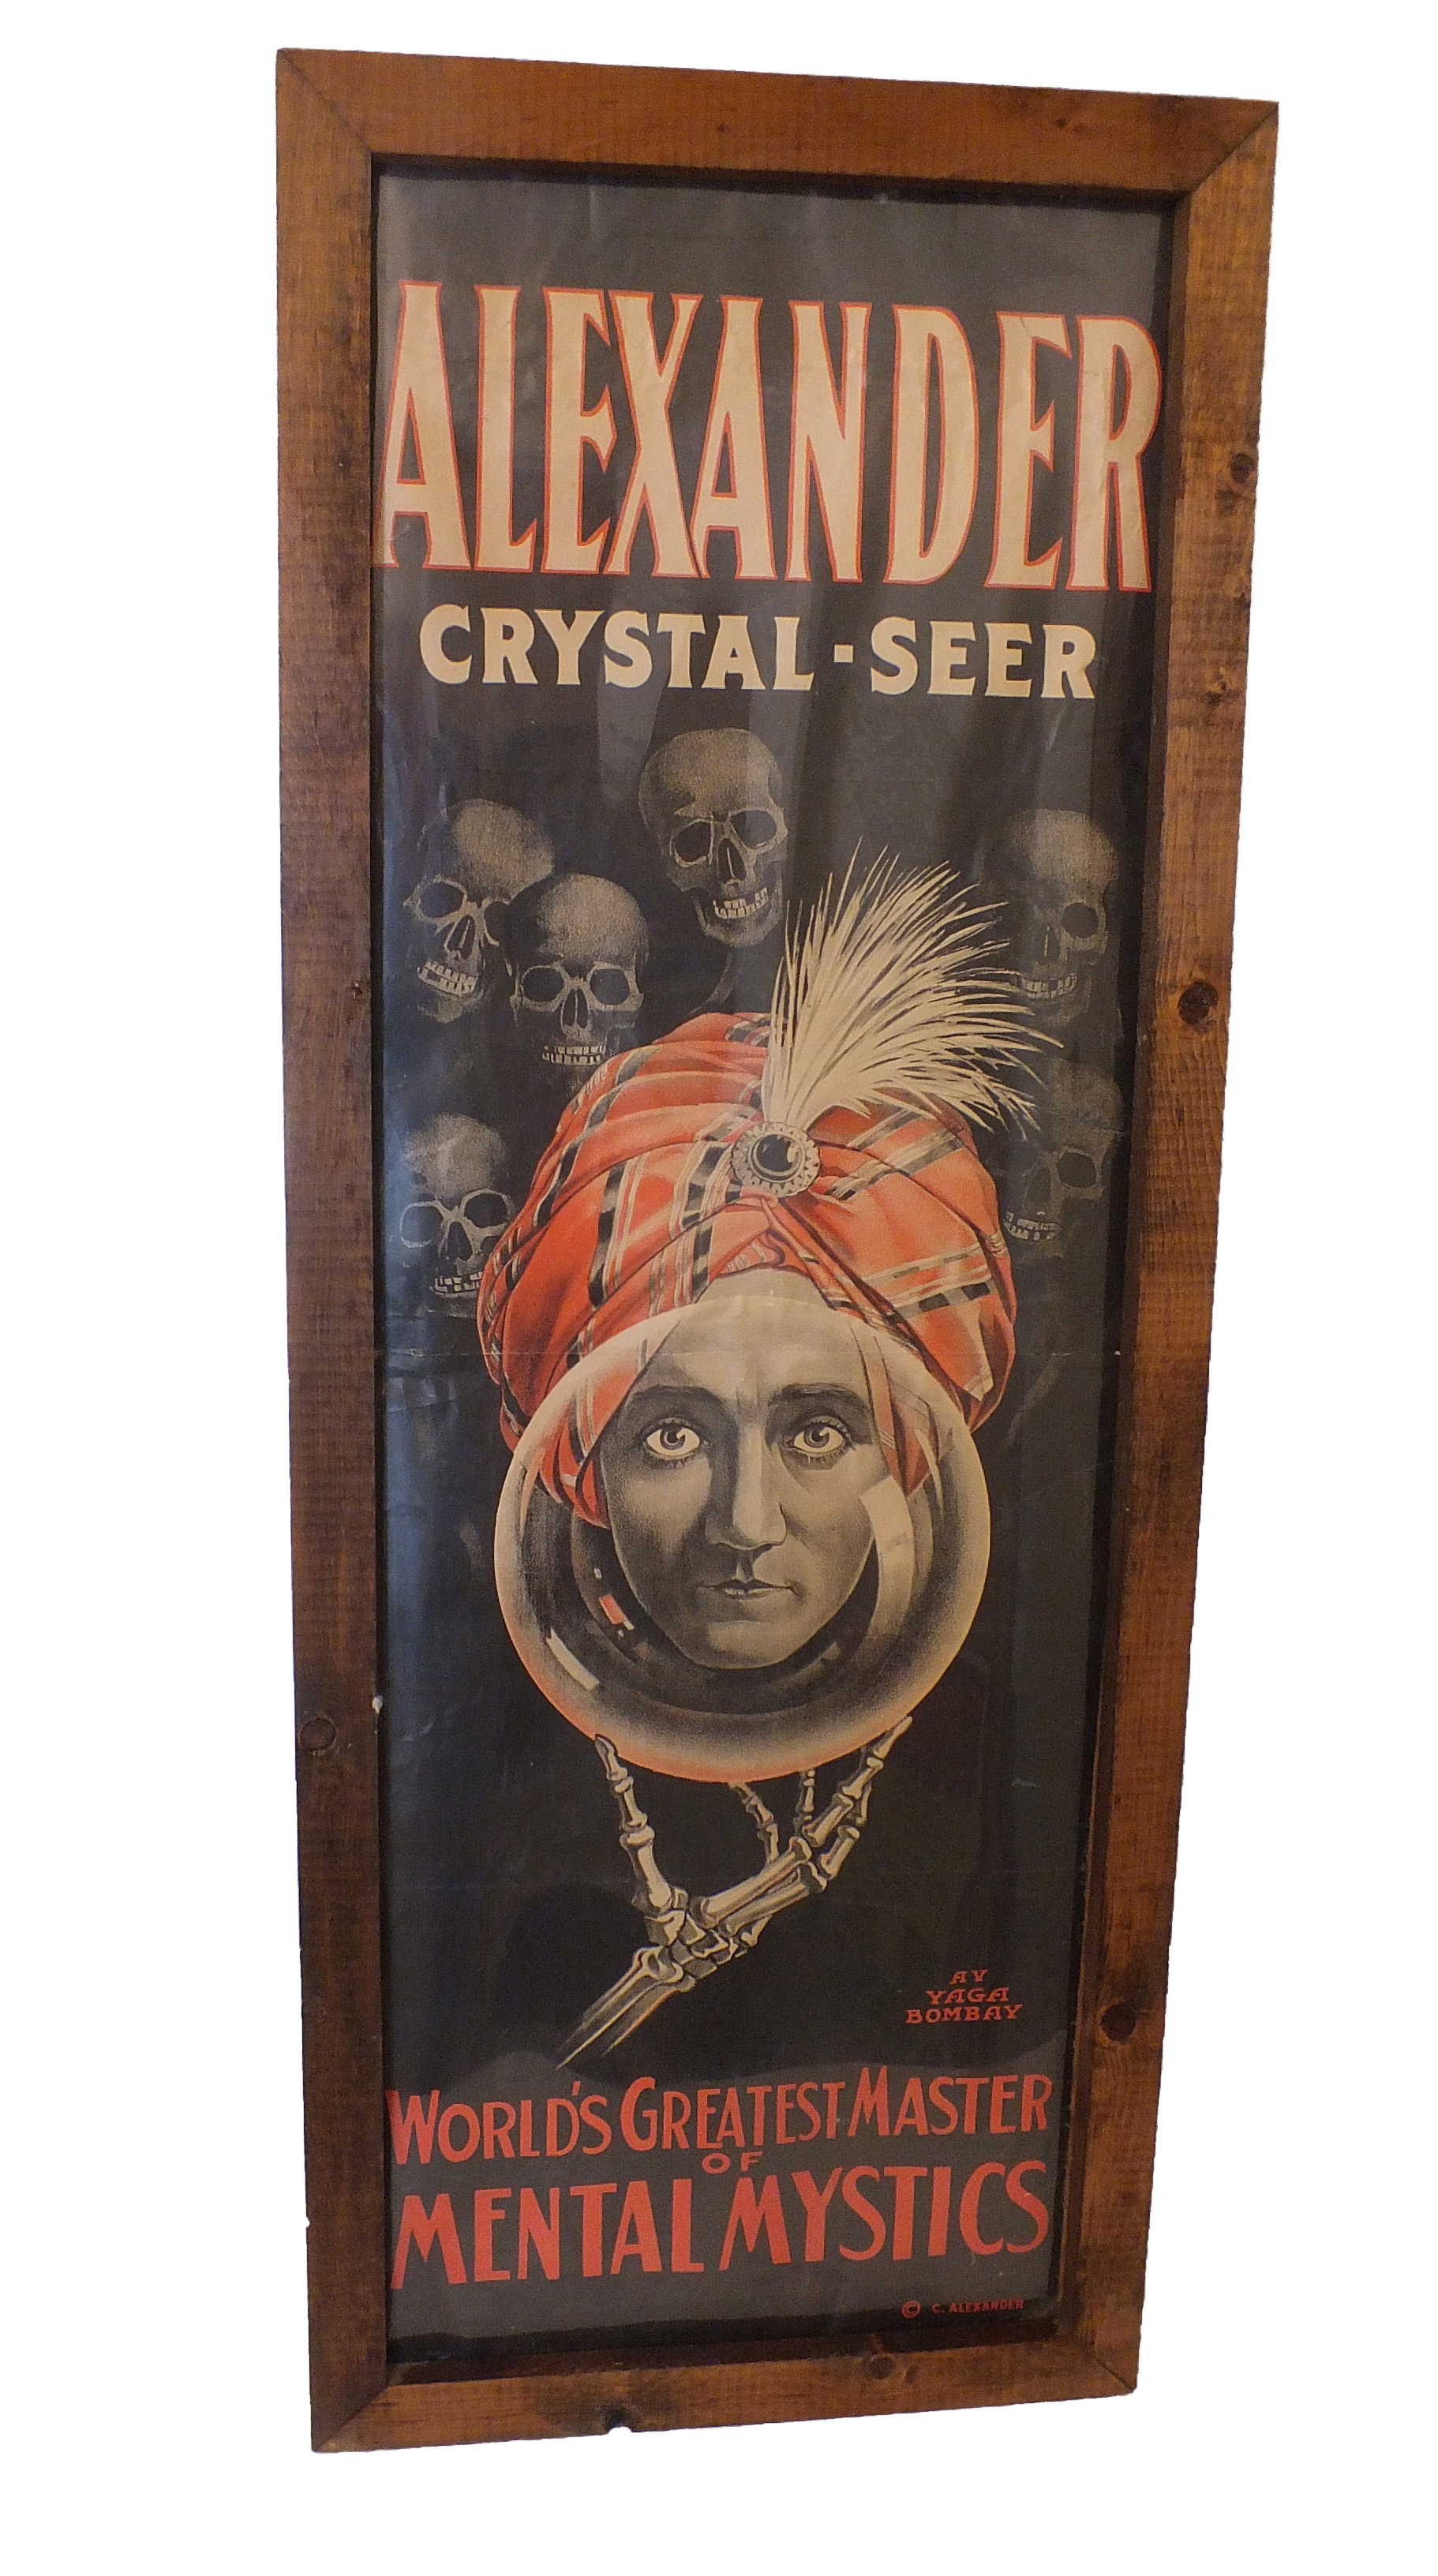 https://0201.nccdn.net/1_2/000/000/187/213/poster-alexander-crystal-seer-worlds-greatest-master-of-mental-m.jpg